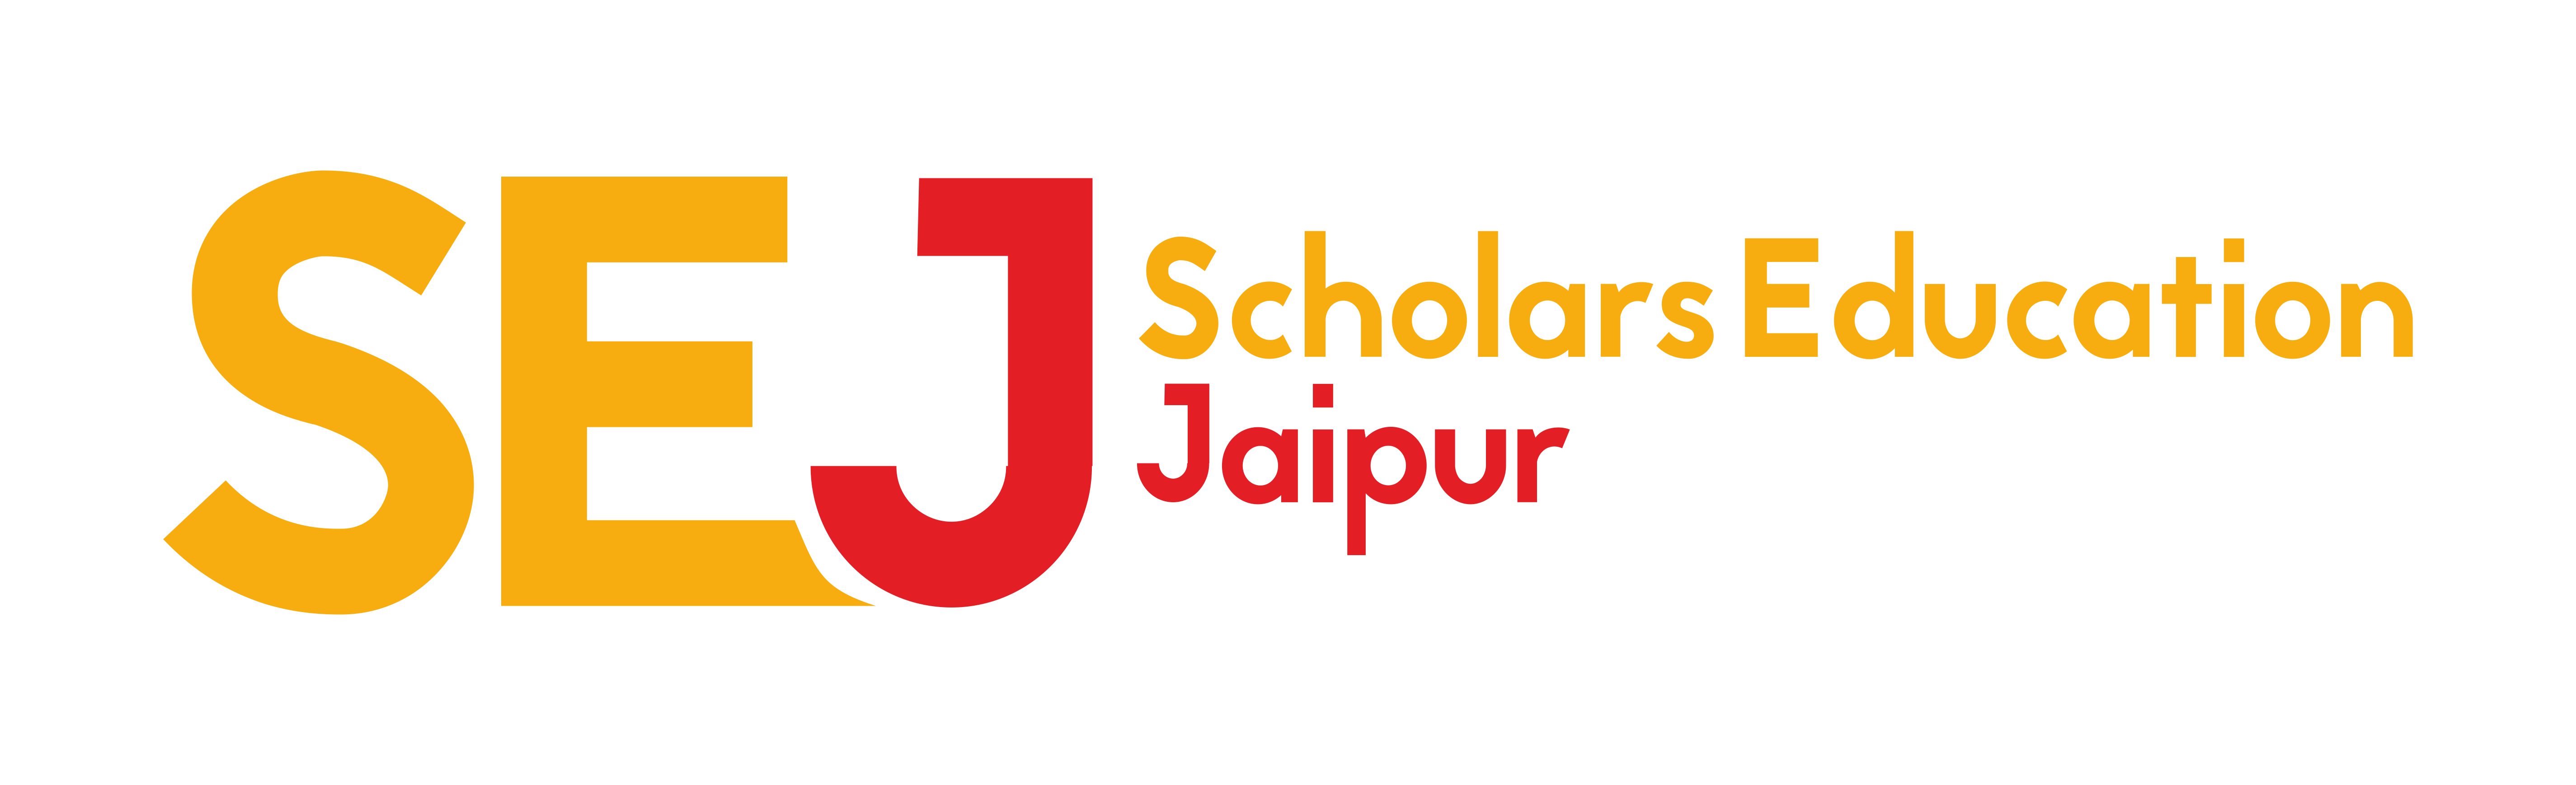 Scholars Education|Schools|Education